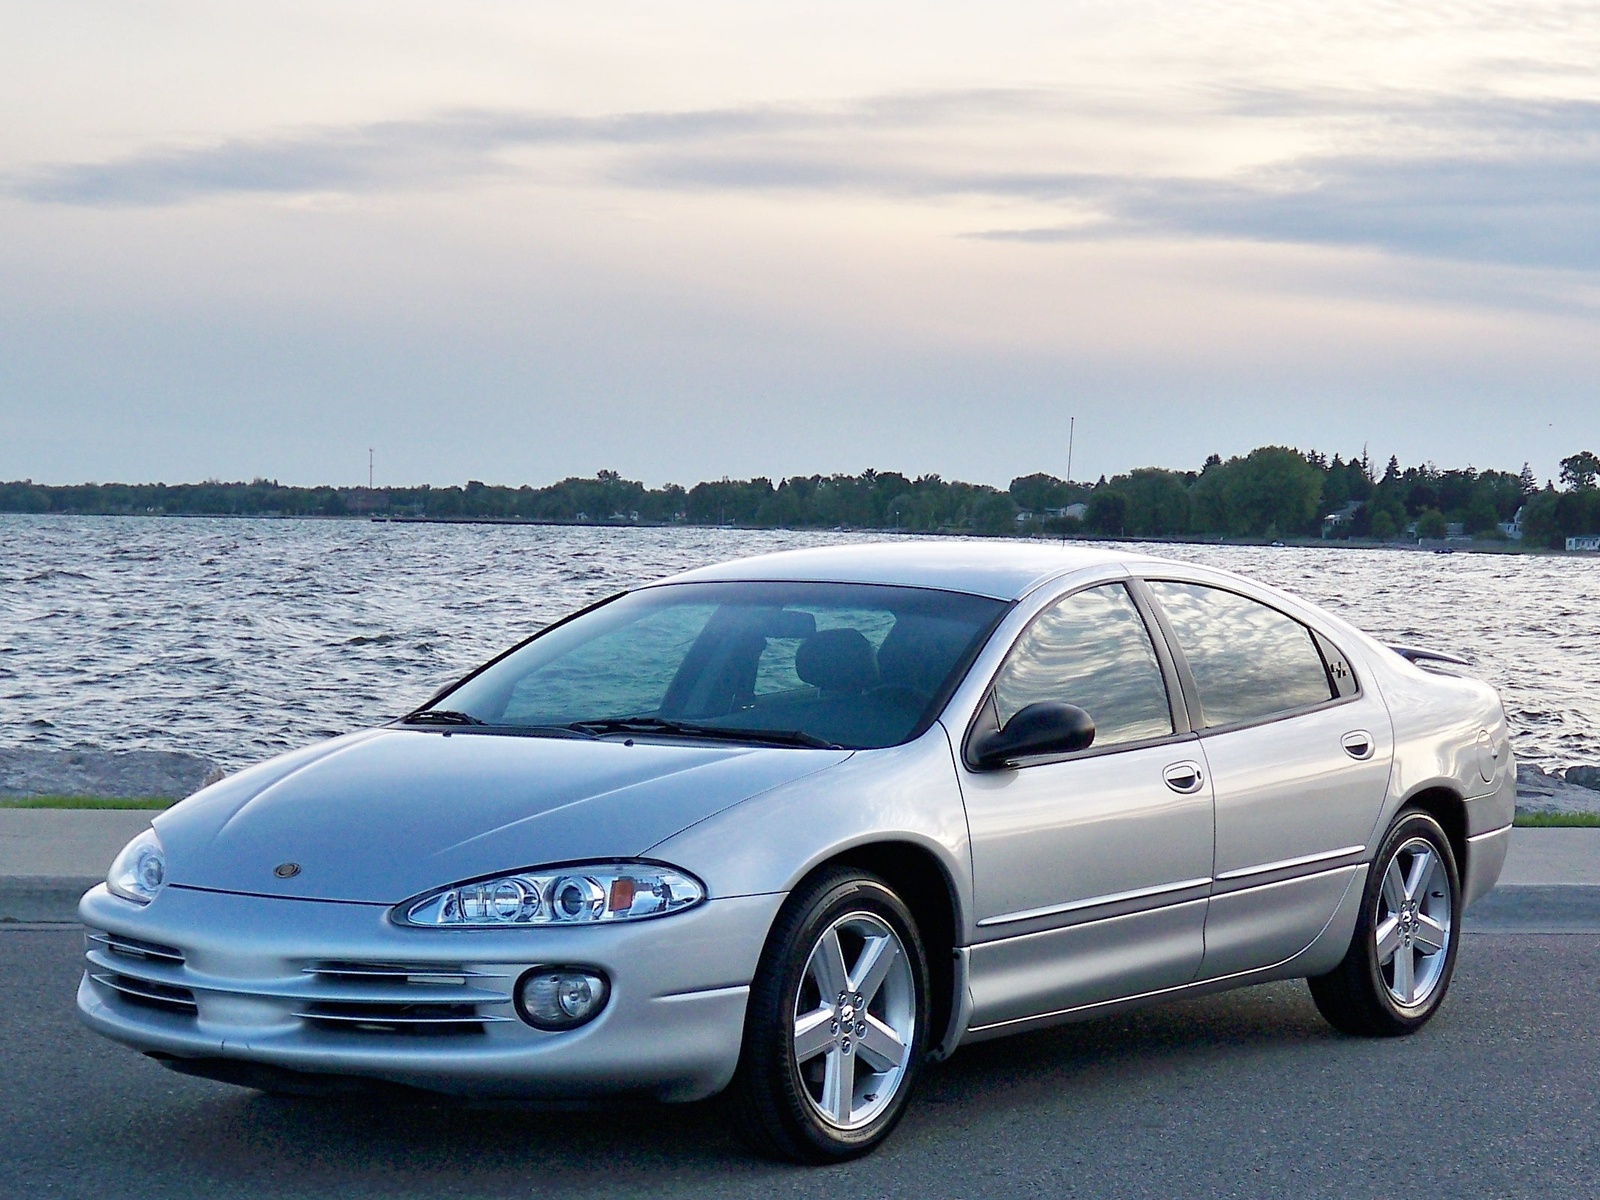 2000 Chrysler intrepid sedan reviews #2